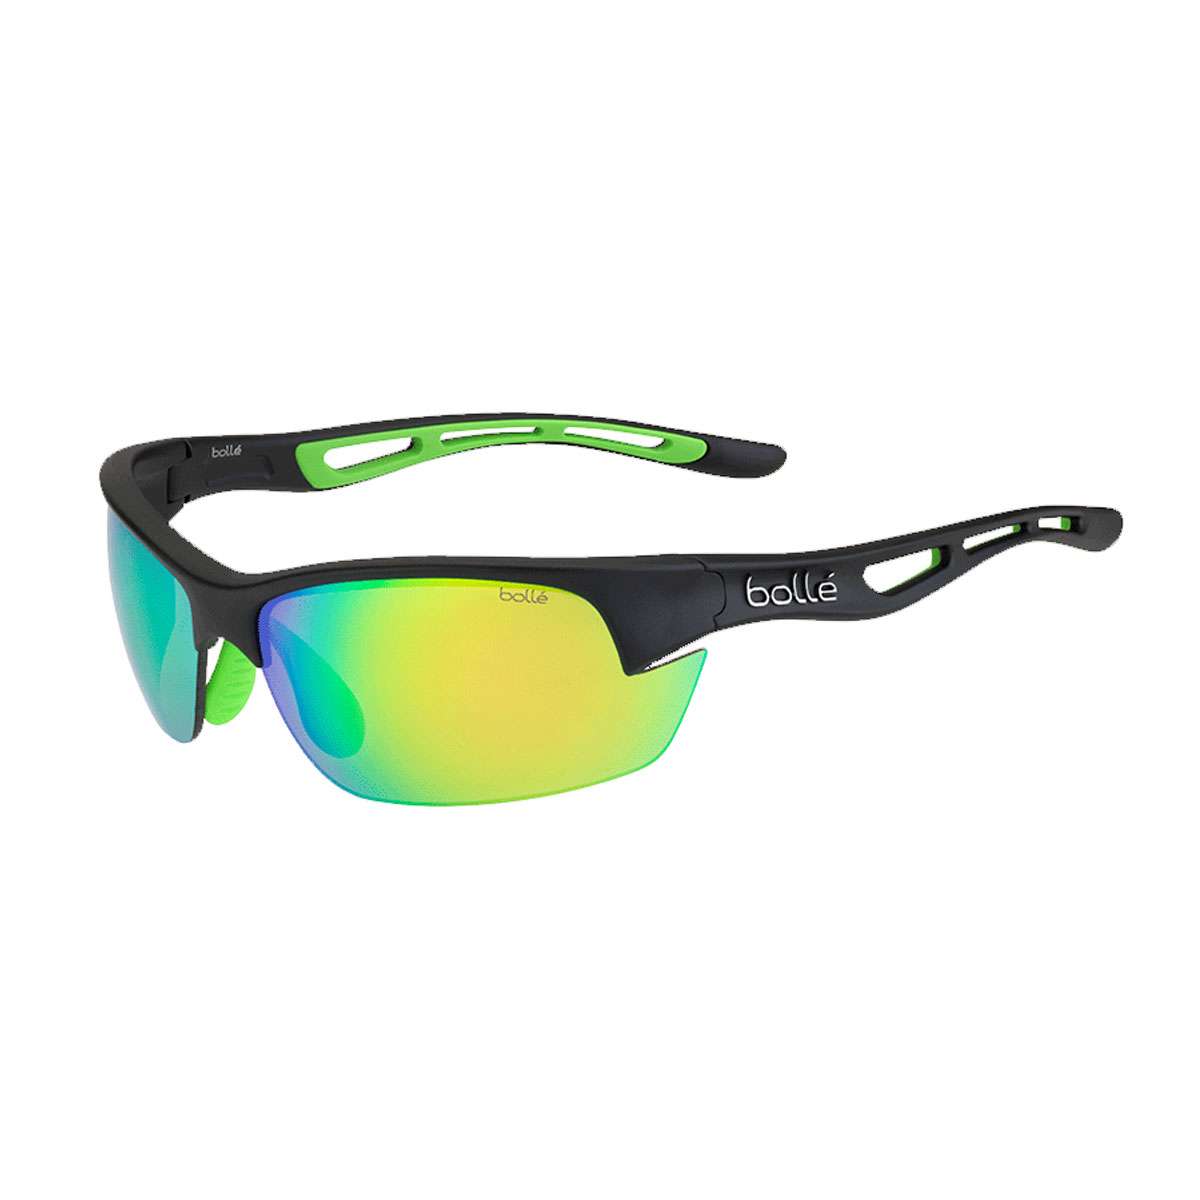 Bolt S Sunglasses - Matte White Green Rubber Frame/Brown Emerald Lens - 12418 - image 2 of 2